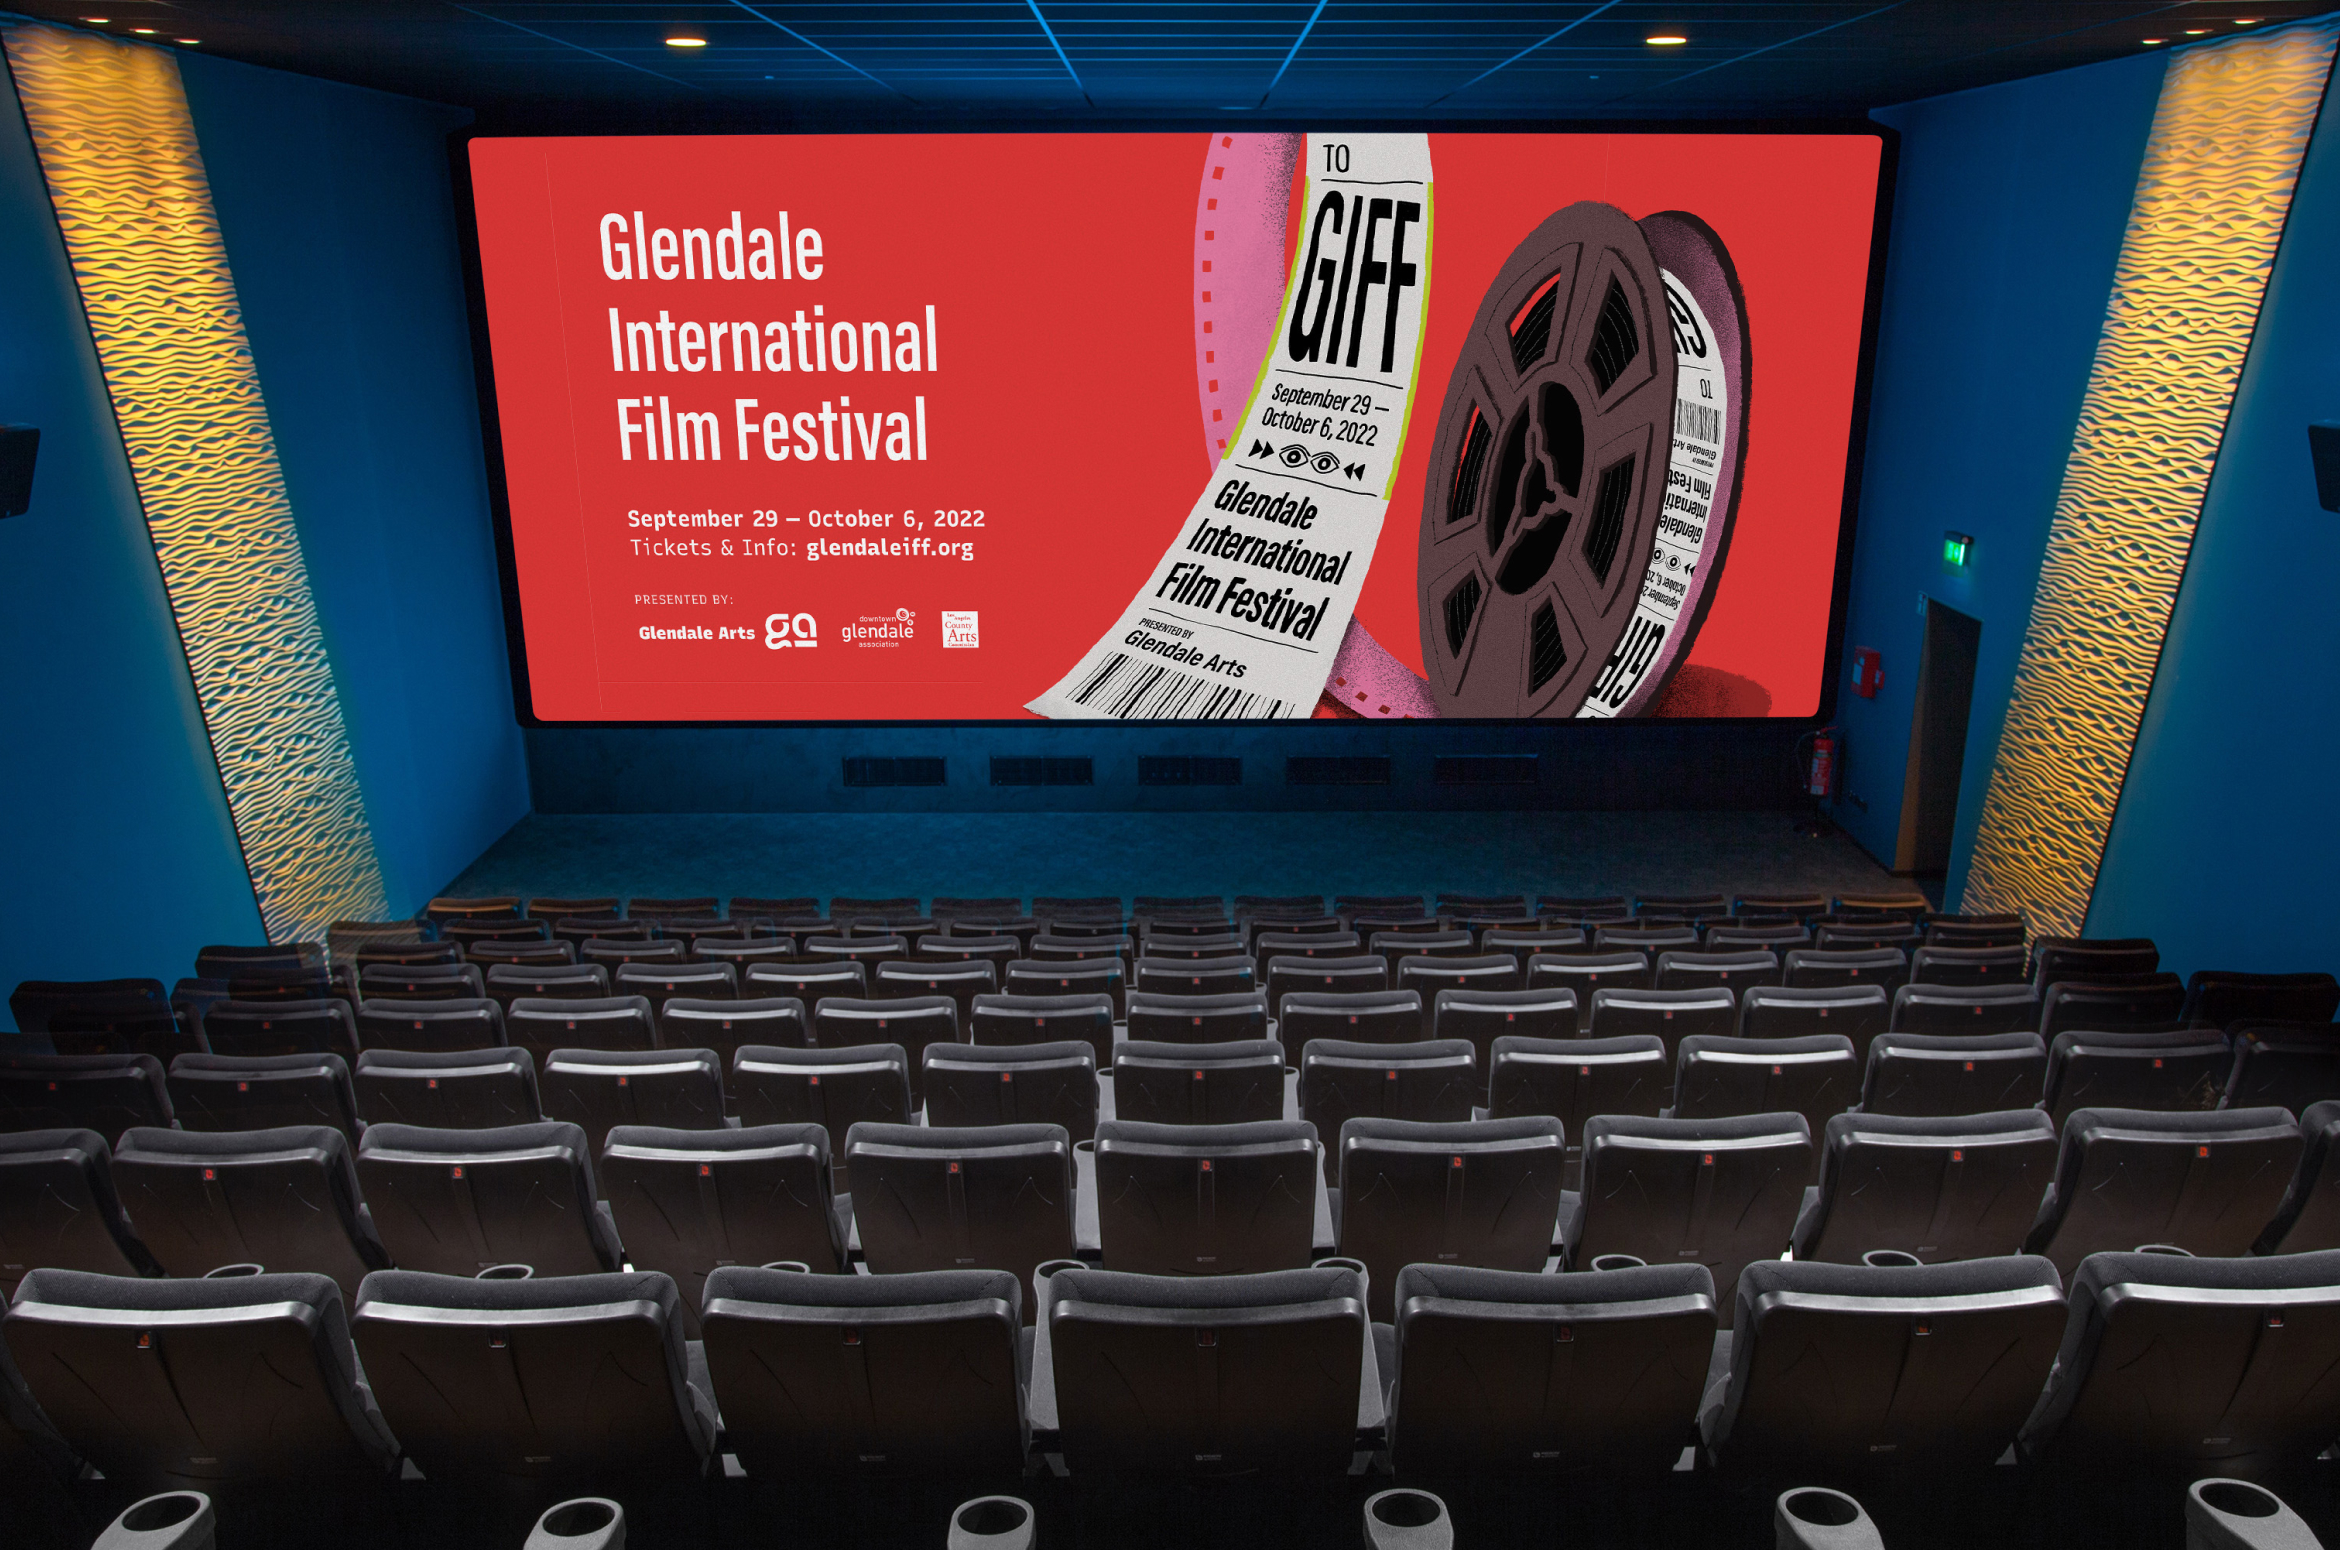 Glendale International Film Festival Big Screen Mockup designed by Kilter.